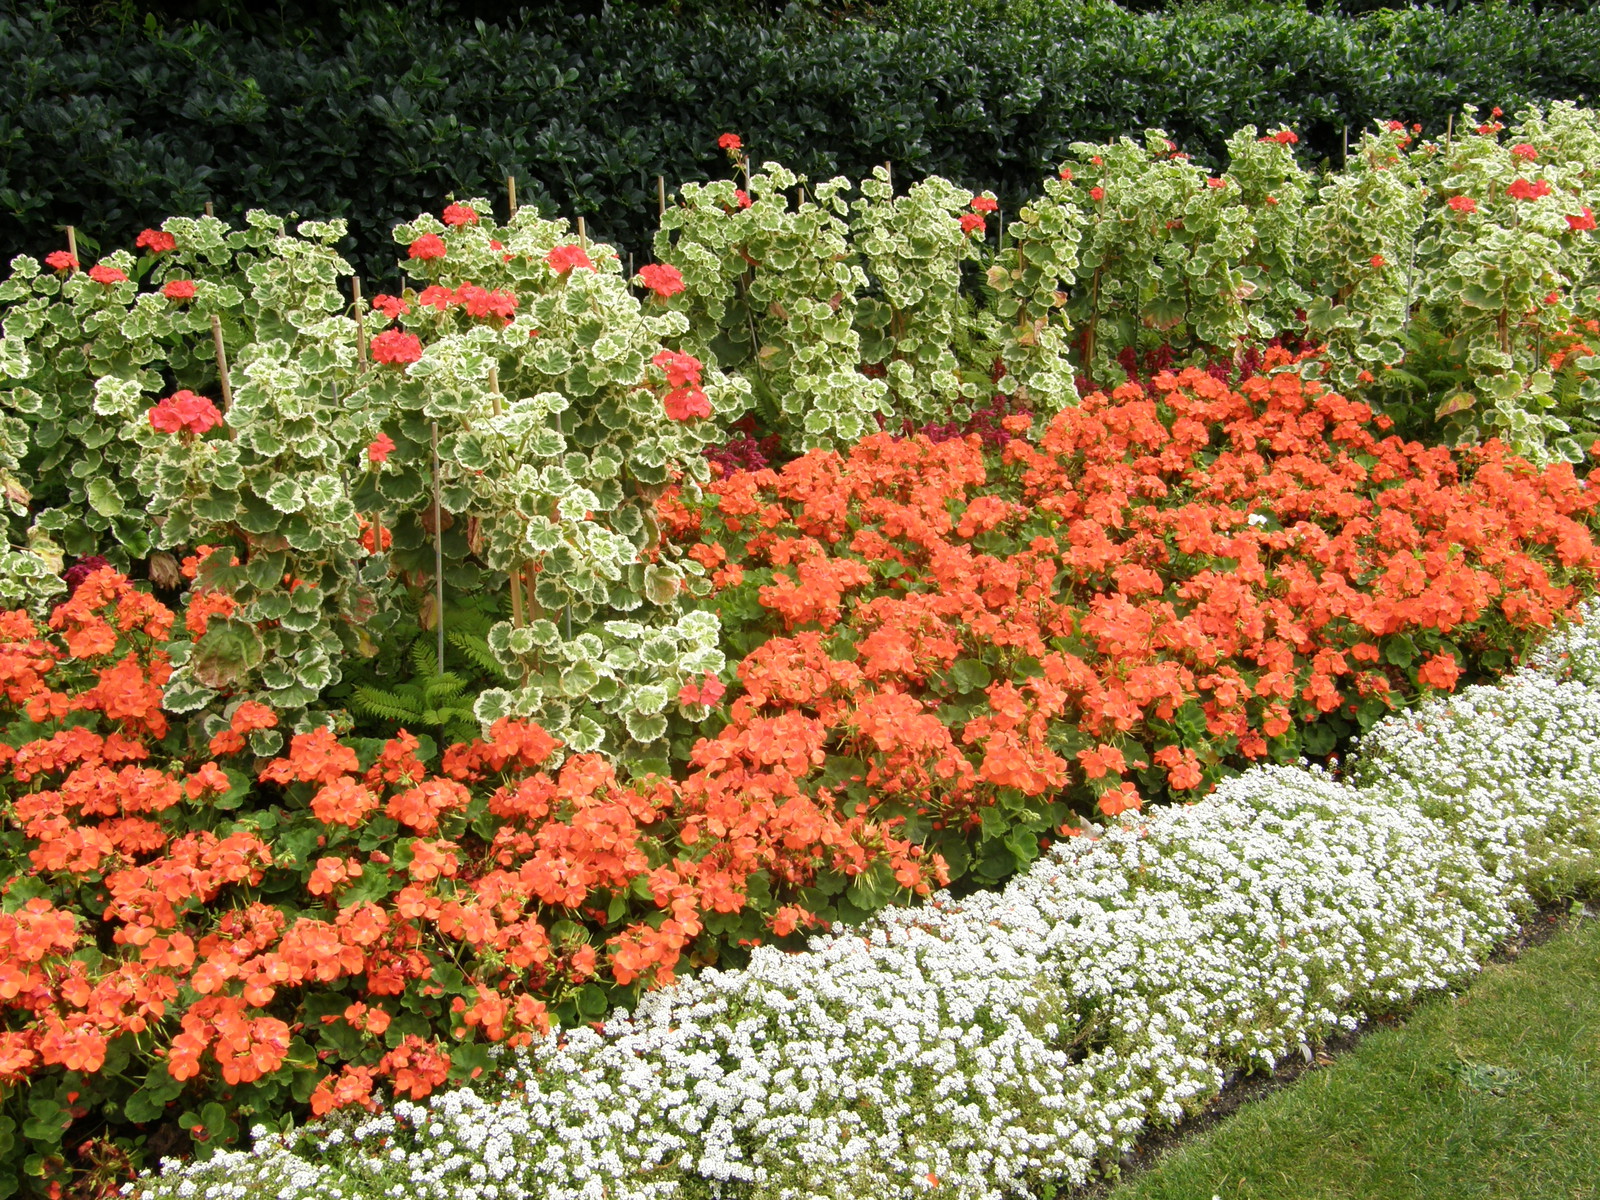 A flowerbed in Regent's Park